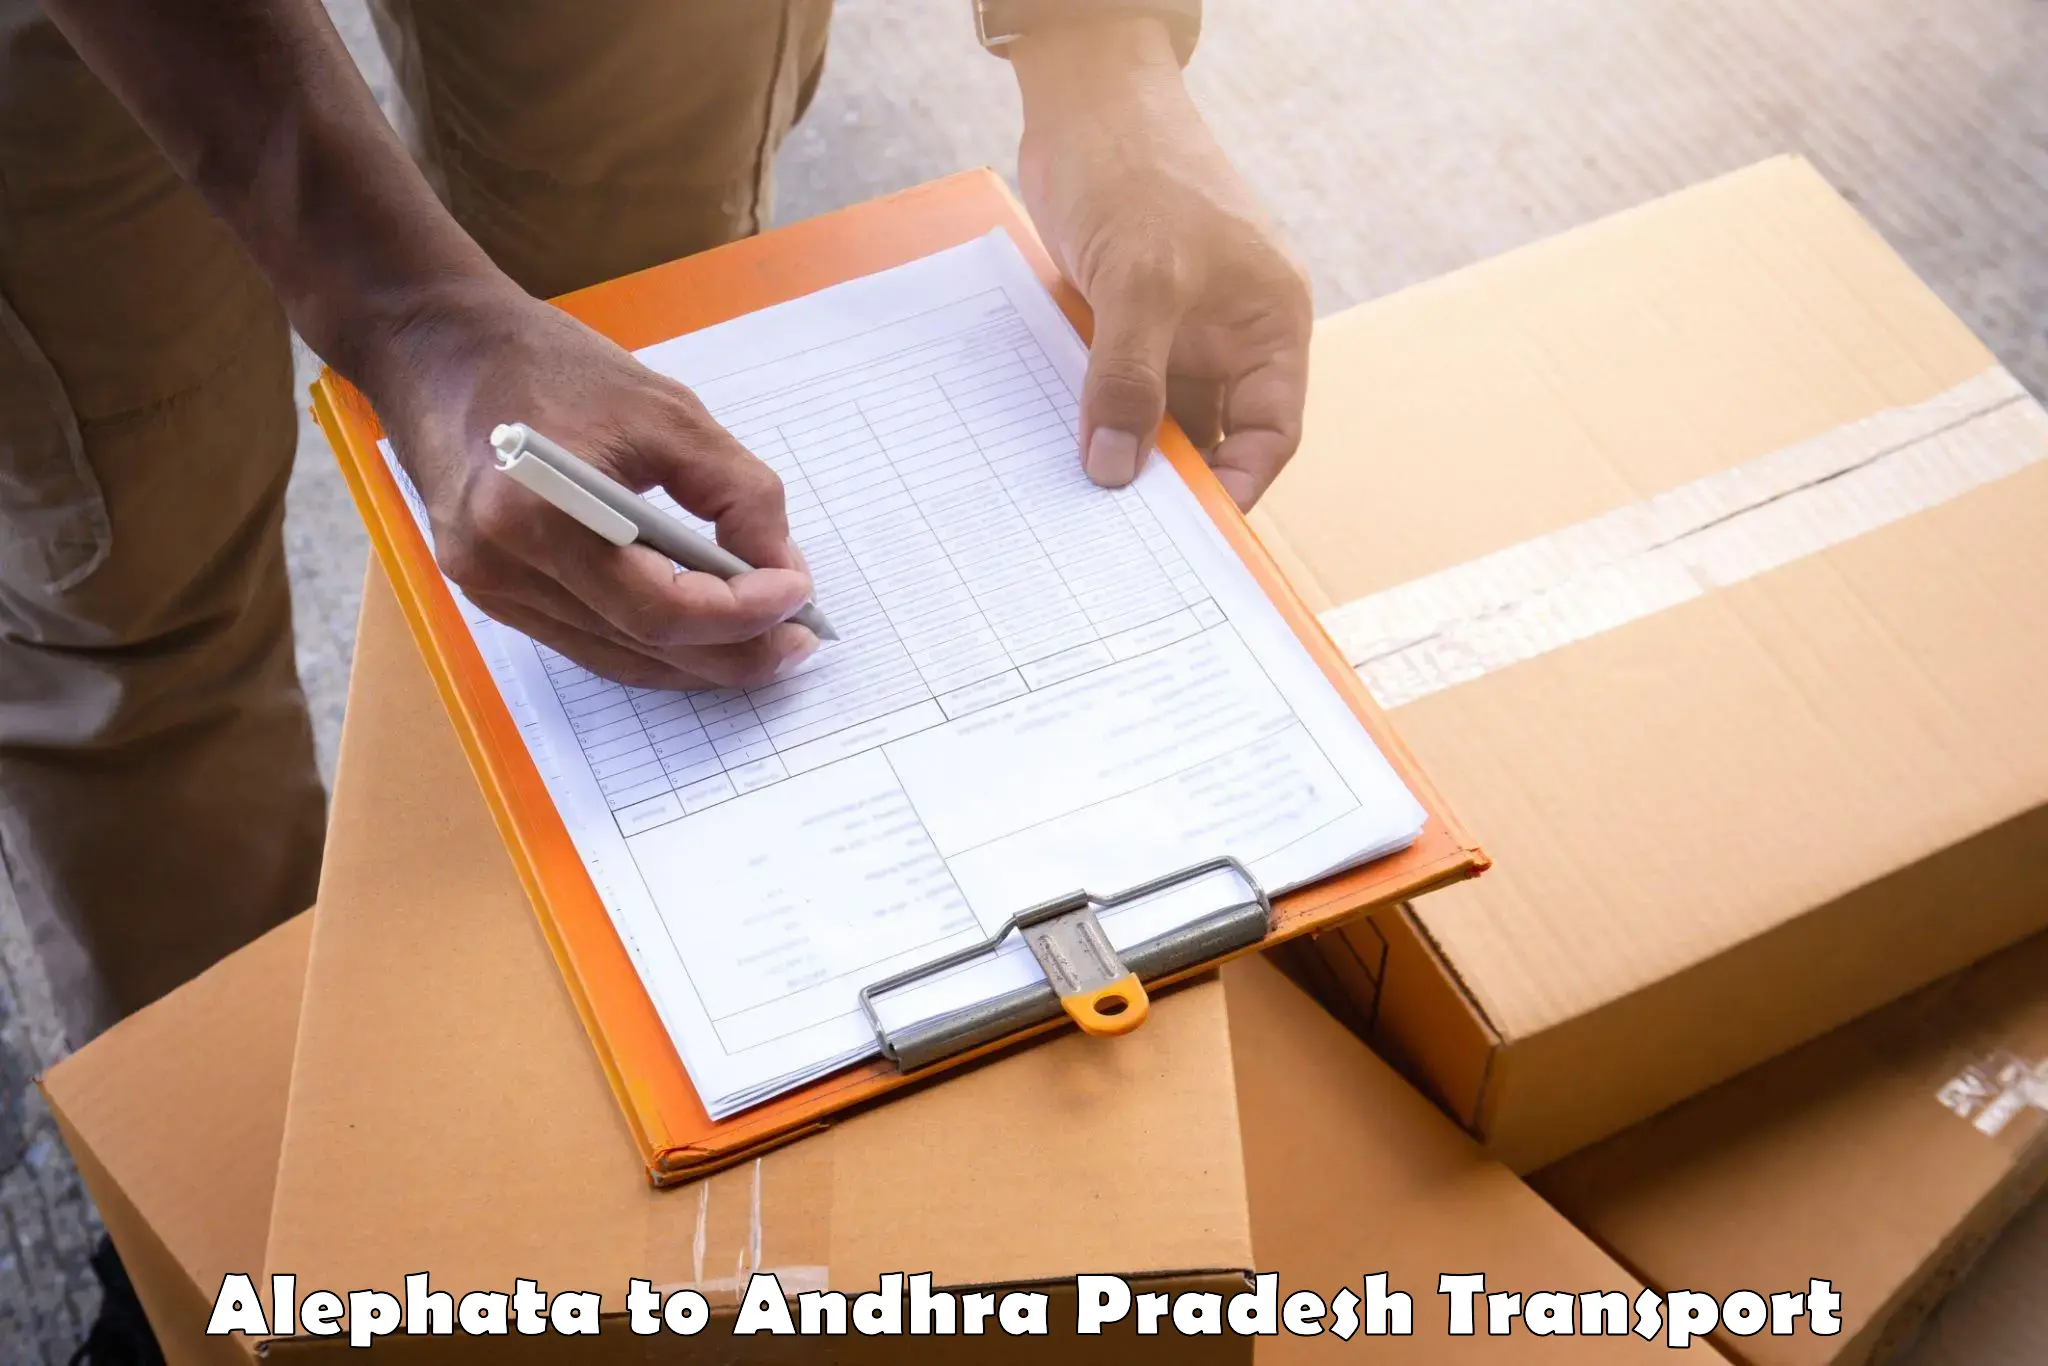 Cycle transportation service Alephata to Andhra Pradesh